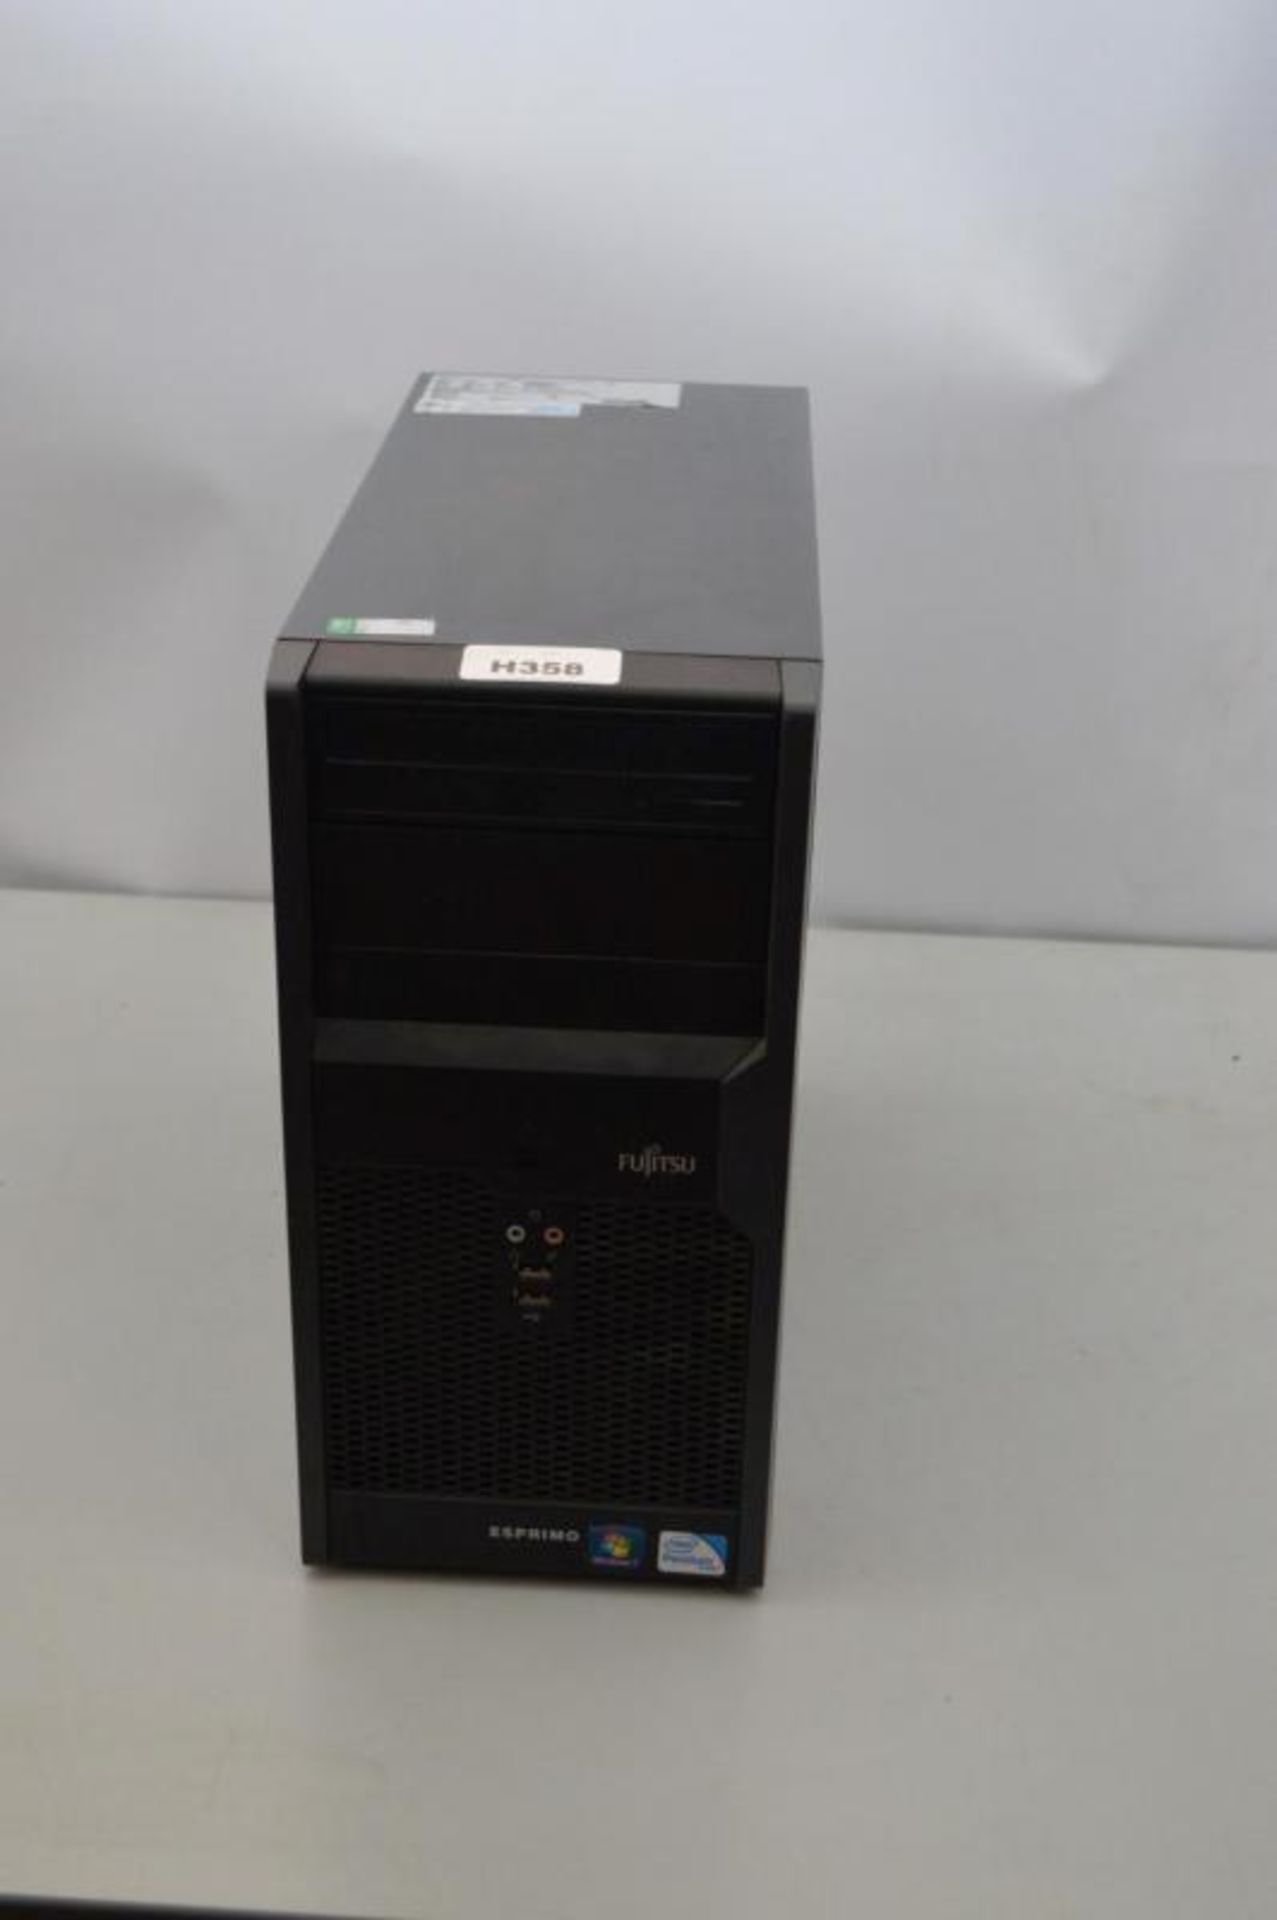 1 x Fujitsu Esprimo P2560 Computer Intel Pentium 3.20 GHz 4GB RAM Hard Drive Not included - Ref H358